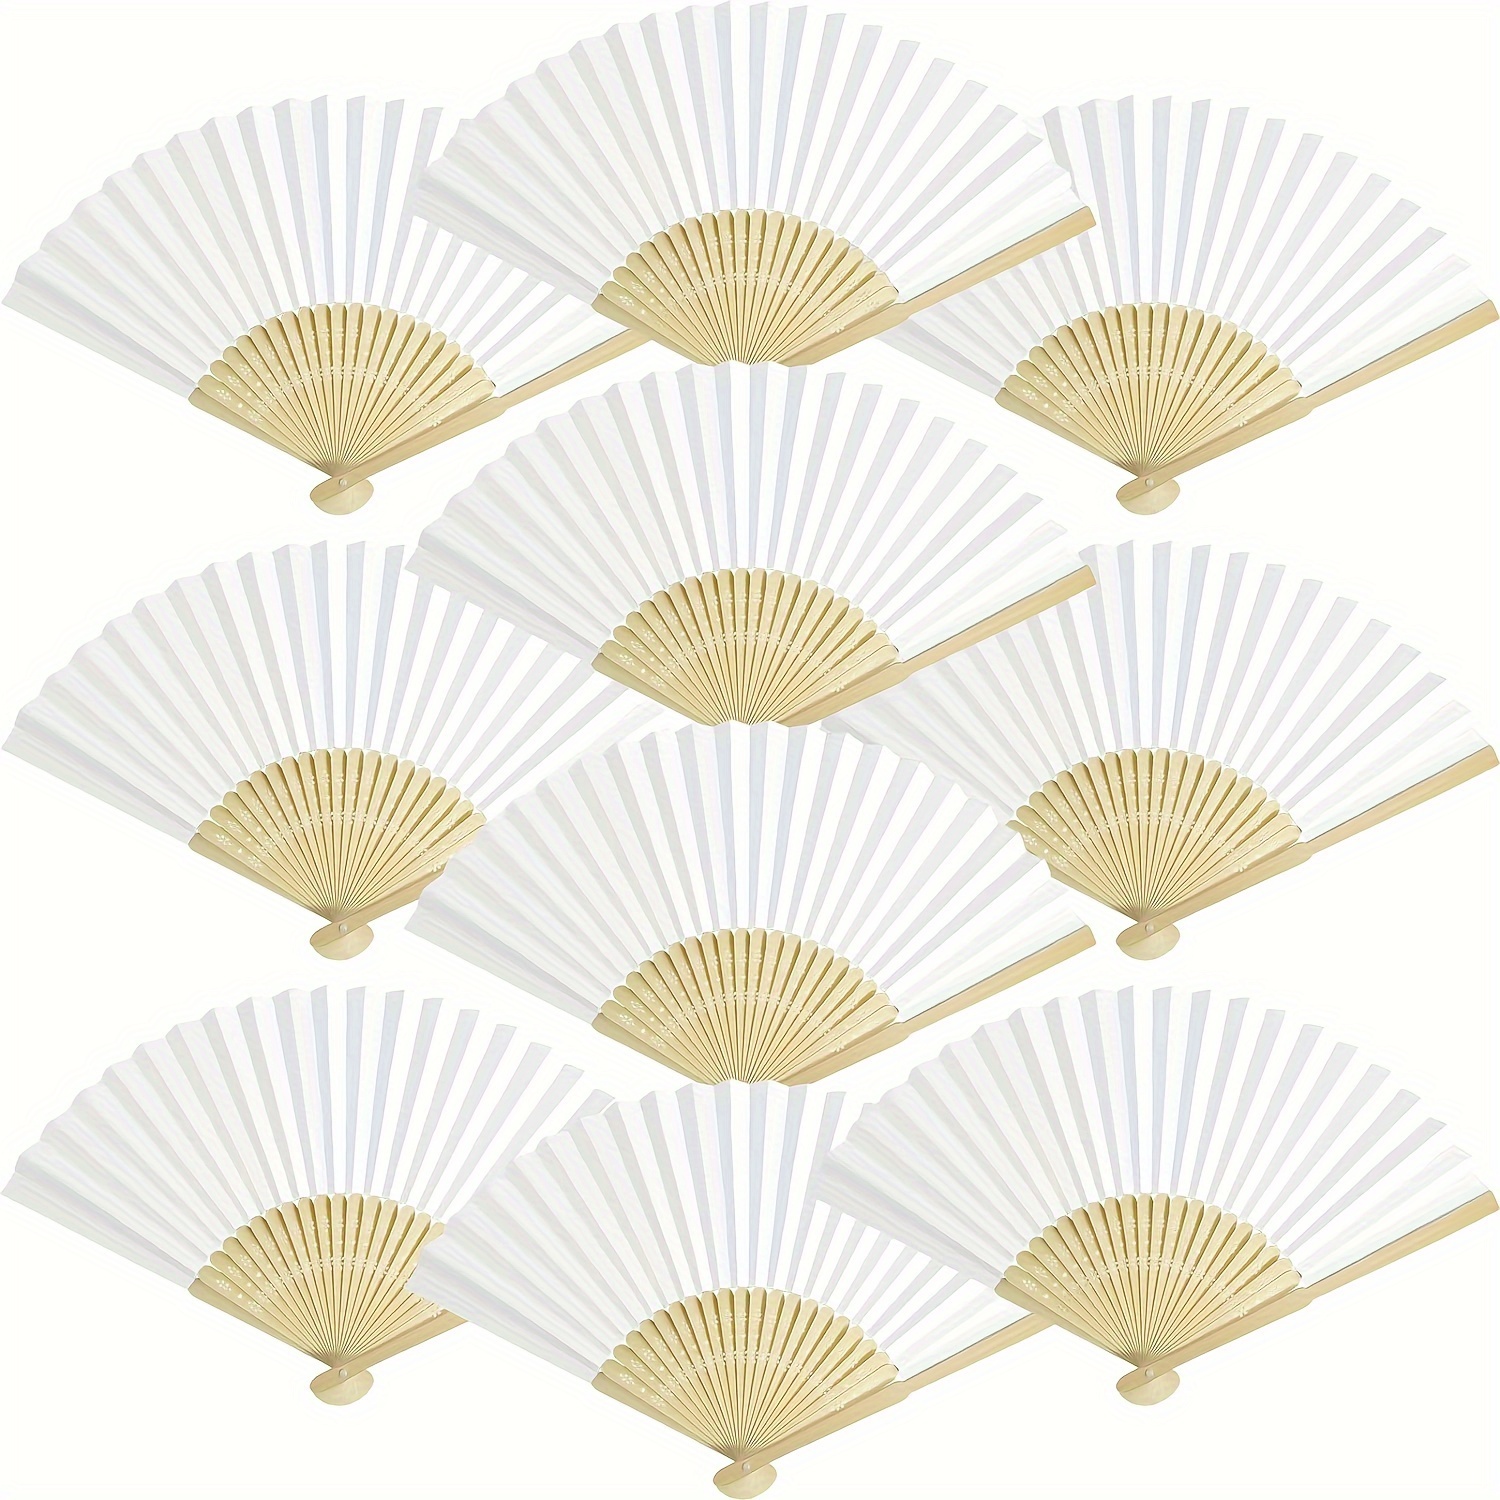 

50pcs Paper Hand Fans - Handheld Folded Fan Decorative Paper Fan Wedding Party Favors -best Gifts For Wedding Party And Home Decoration